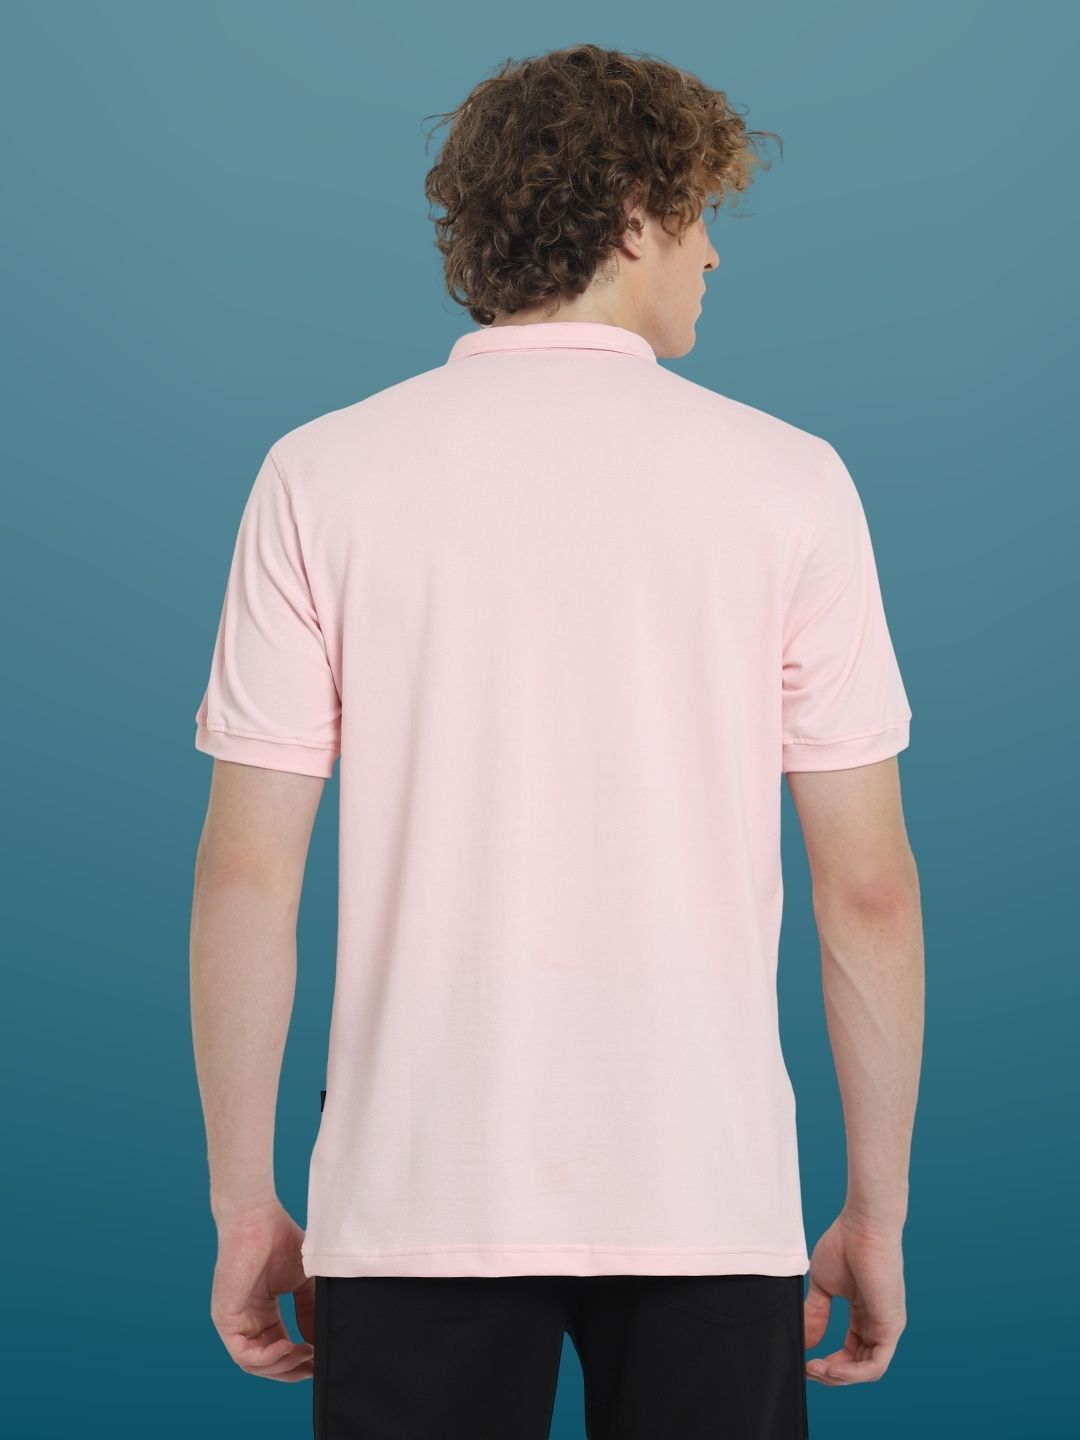 Blush Pink Polo Neck Zipper T-Shirt - Wearduds